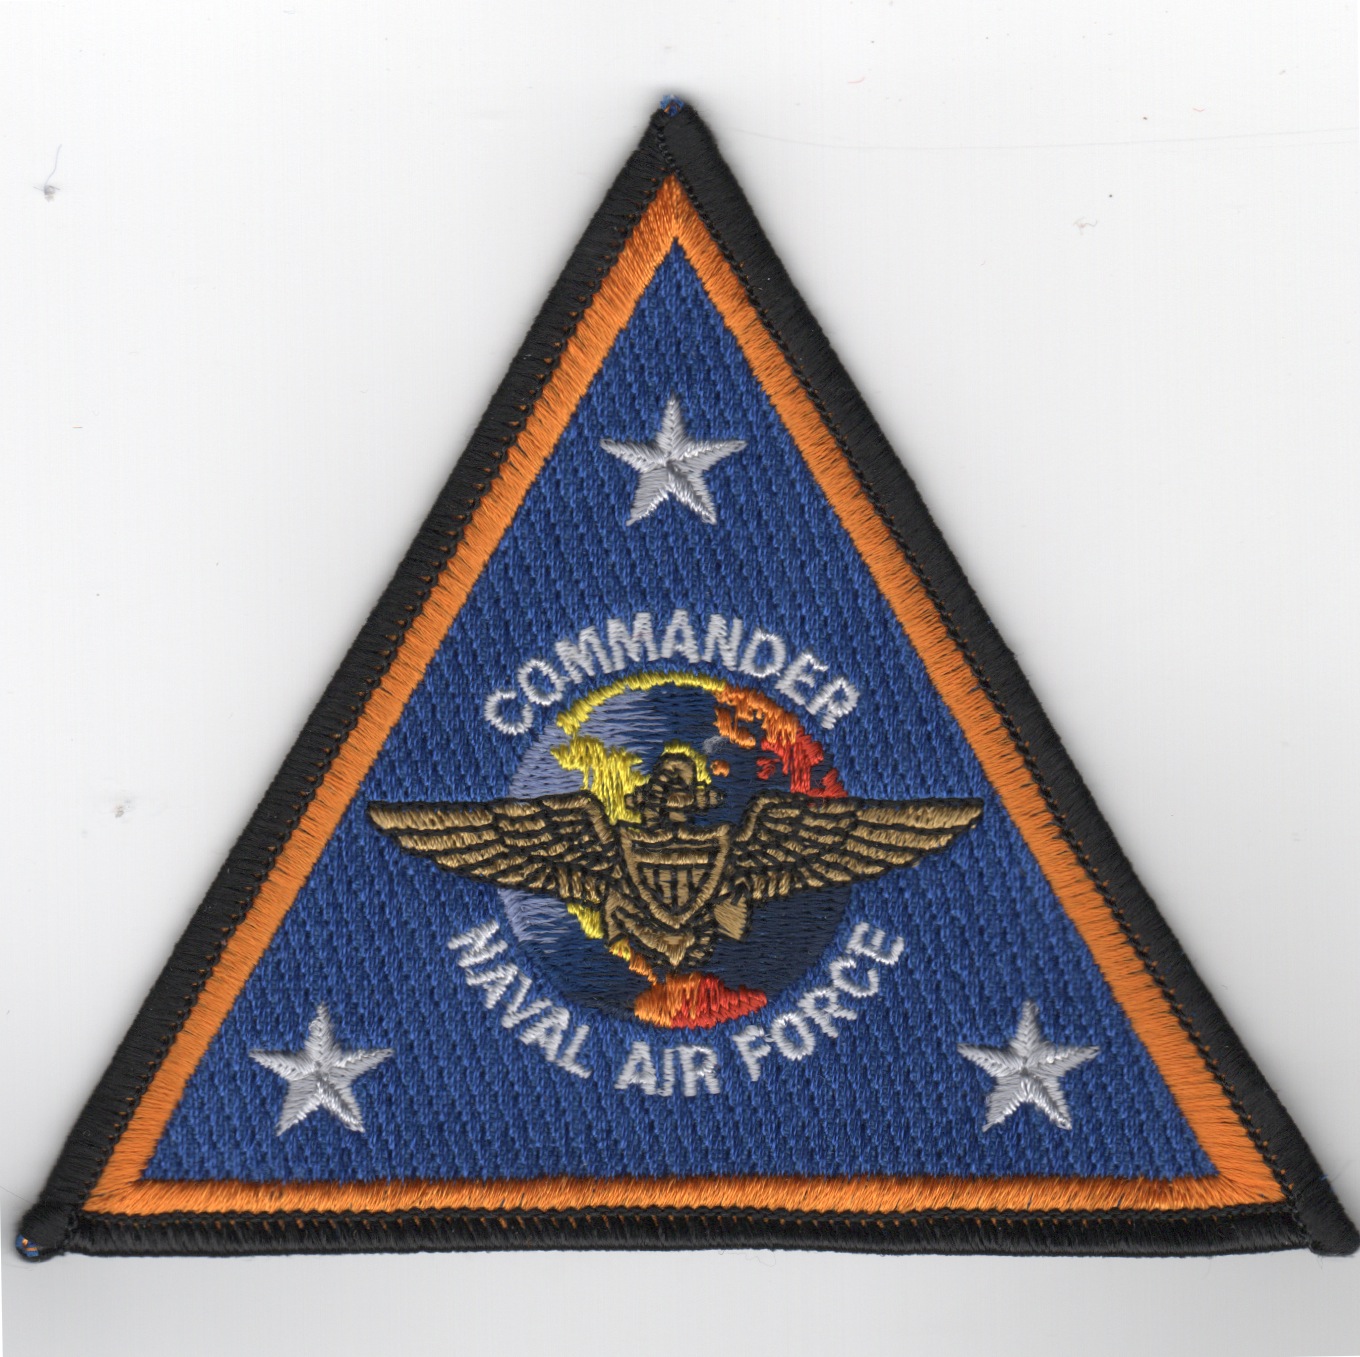 Commander, Naval Air Force (Tri)